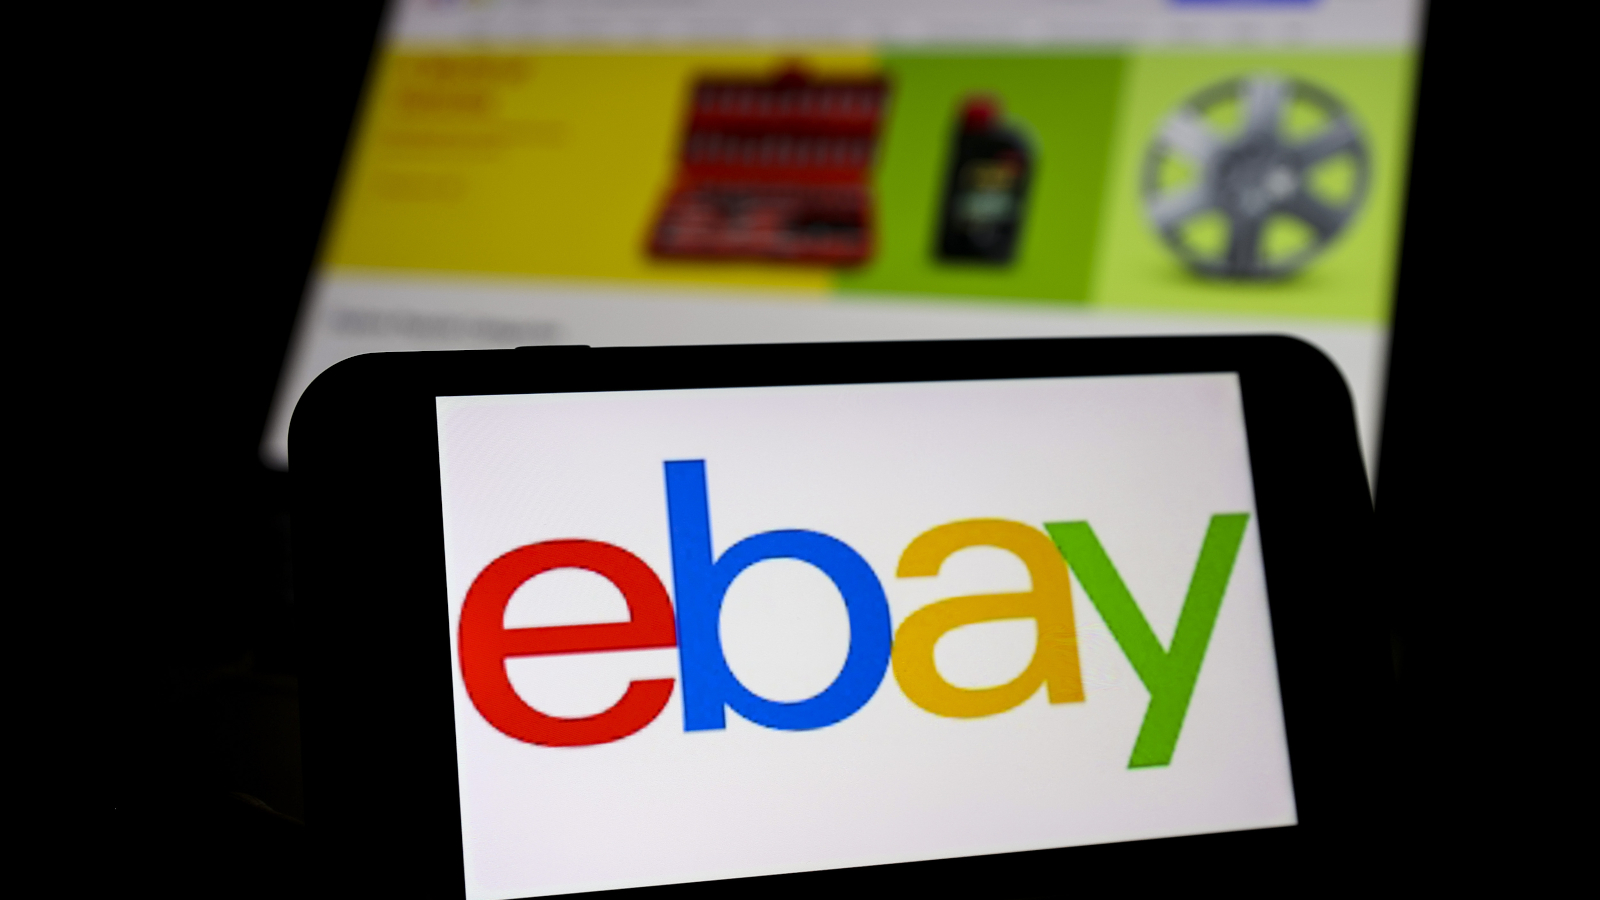 Why did eBay lose popularity?